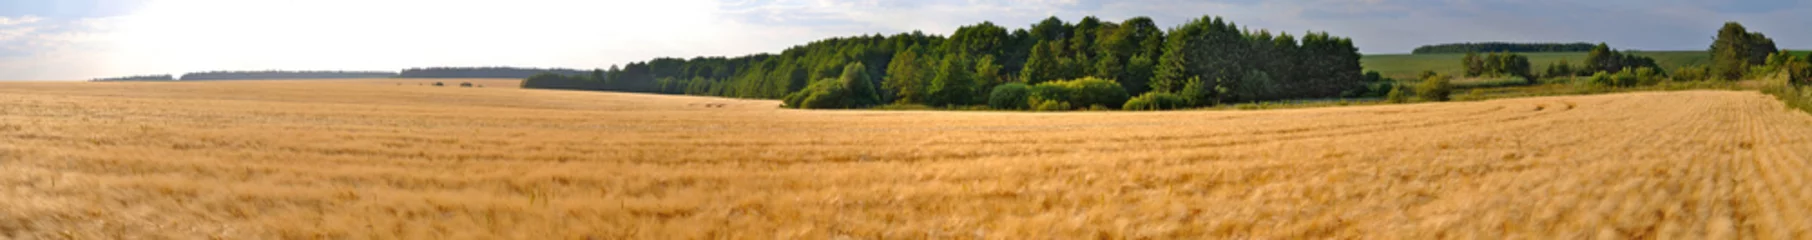 Wall murals Countryside wheat field panorama